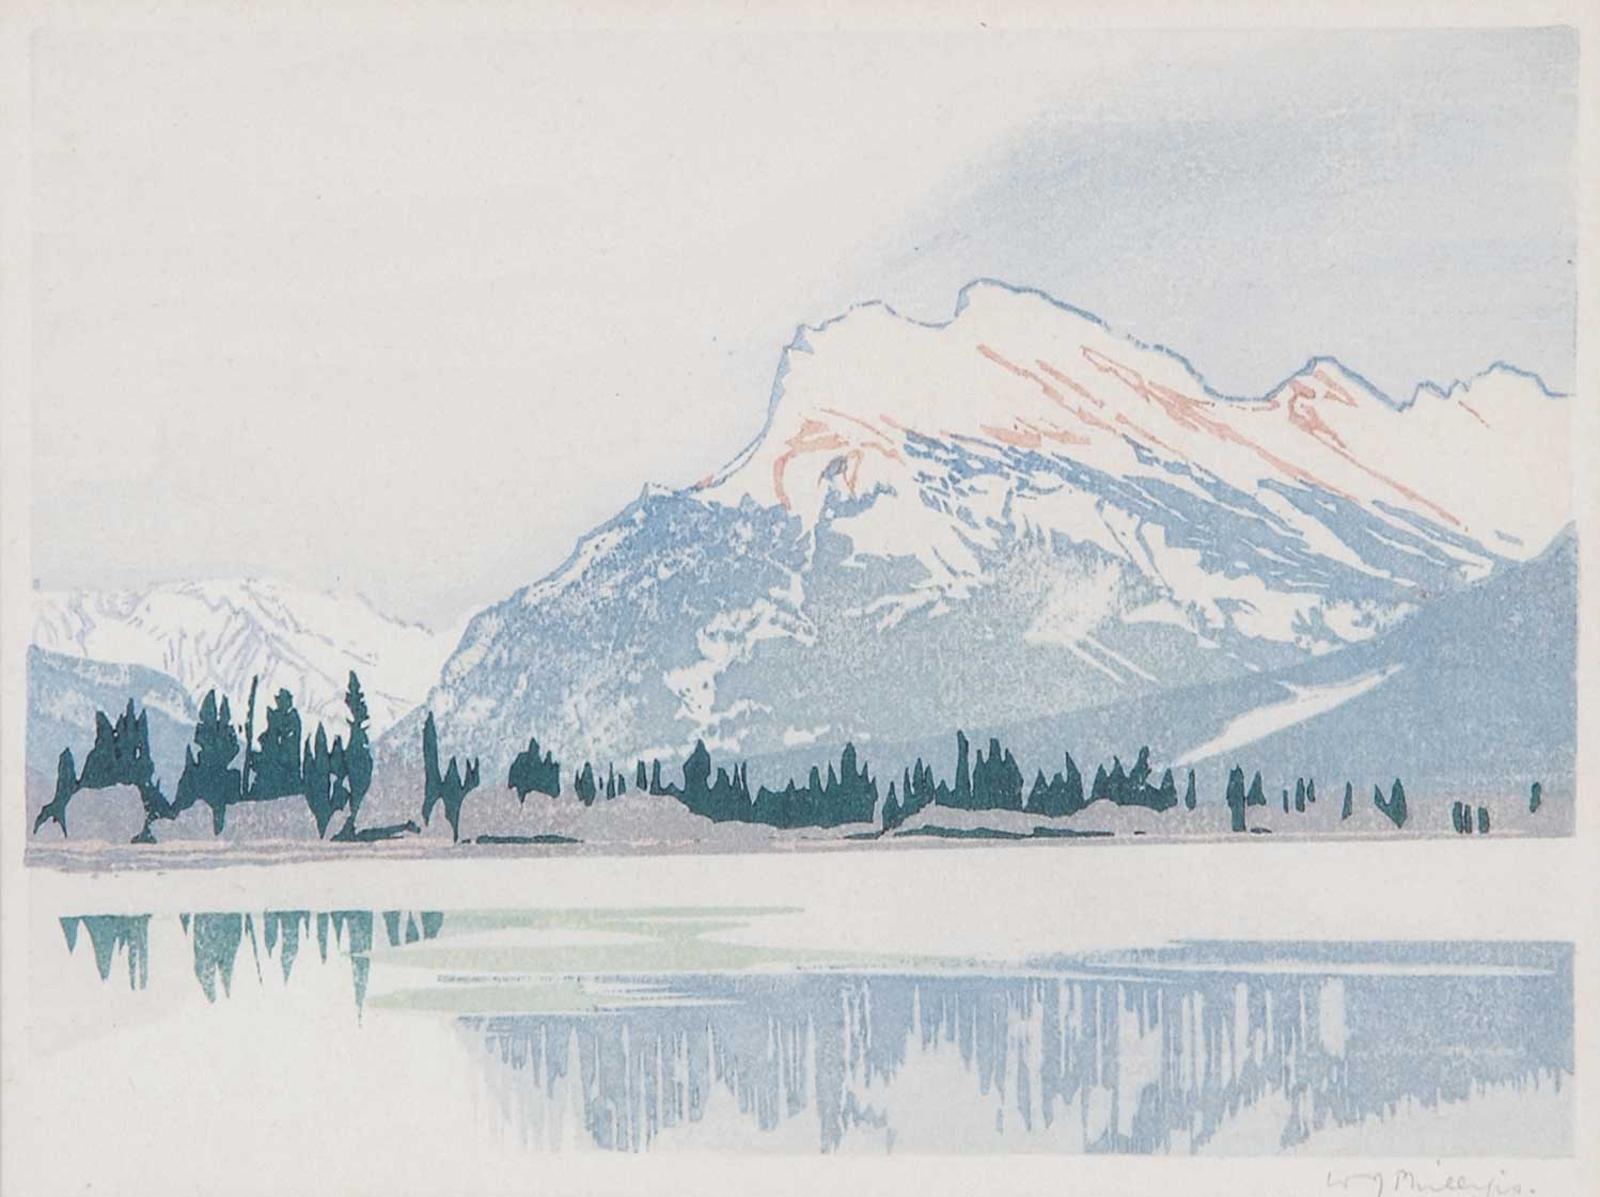 Walter Joseph (W.J.) Phillips (1884-1963) - Rundle Winter